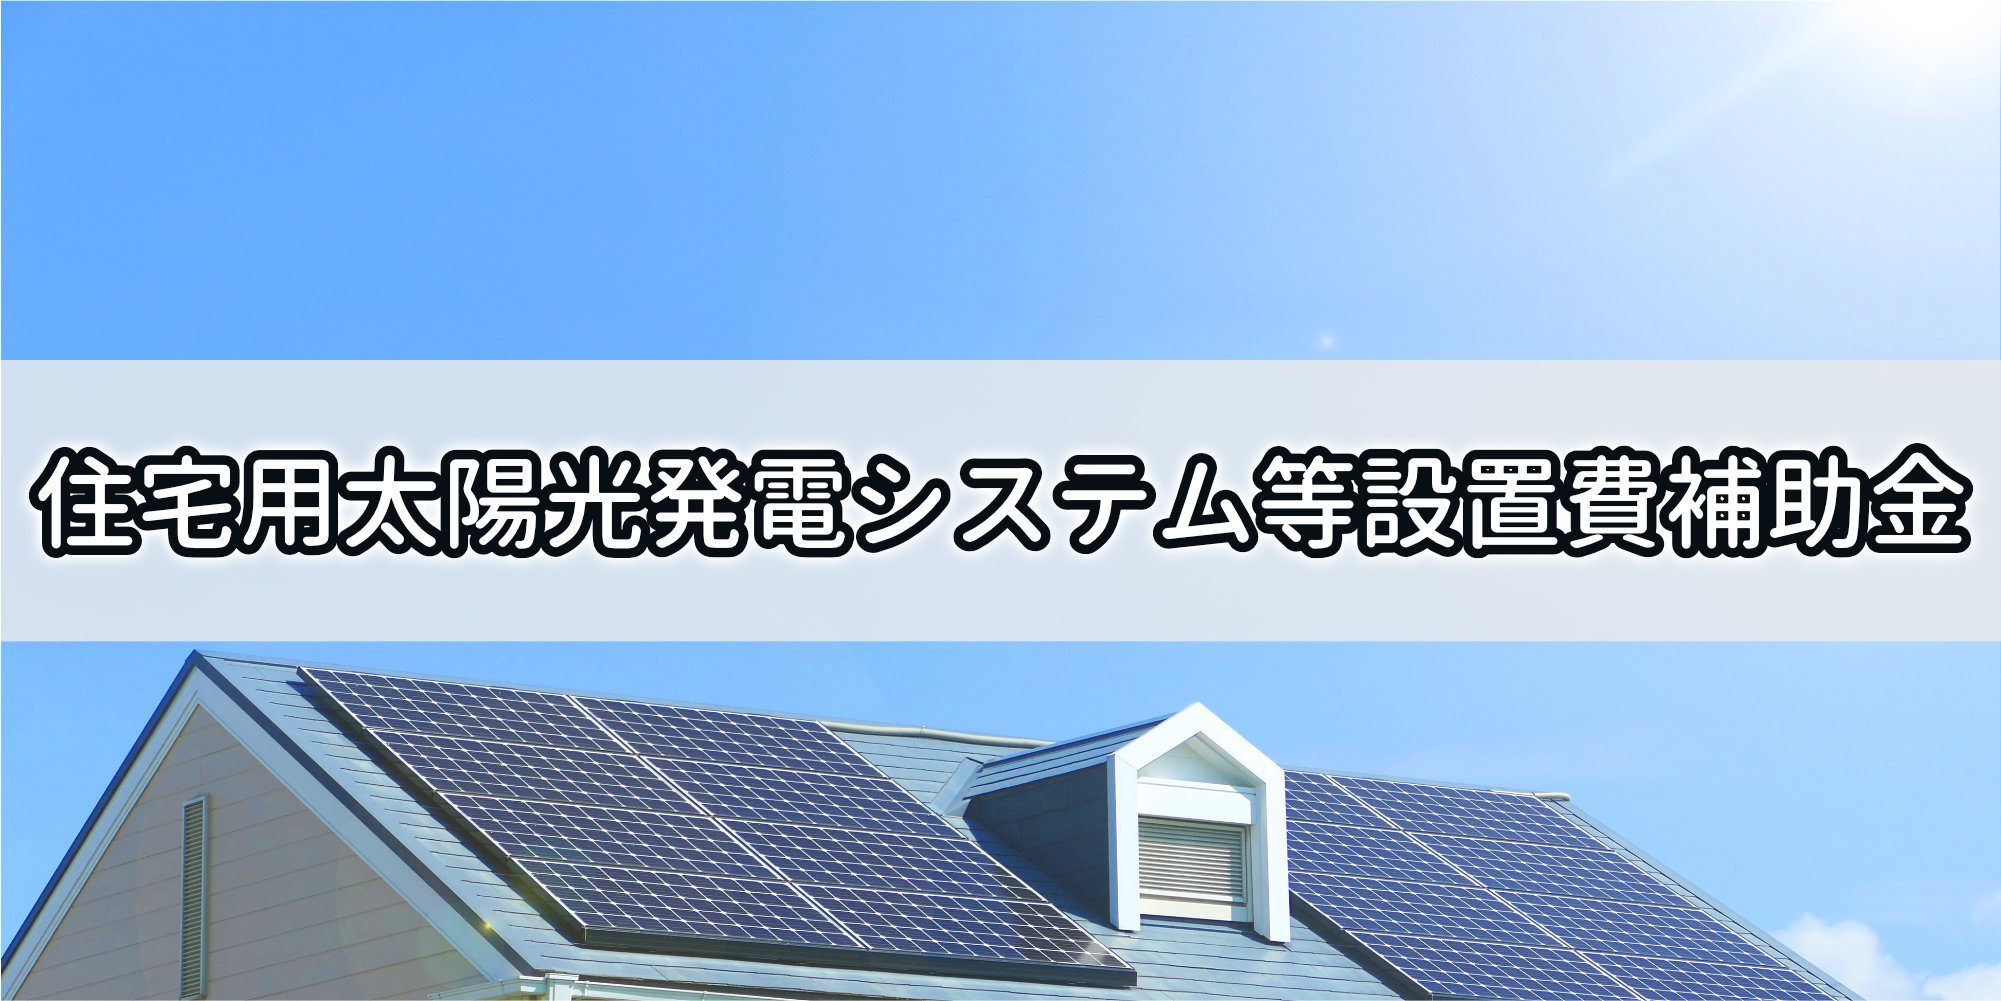 栃木市住宅用太陽光発電システム等設置費補助金